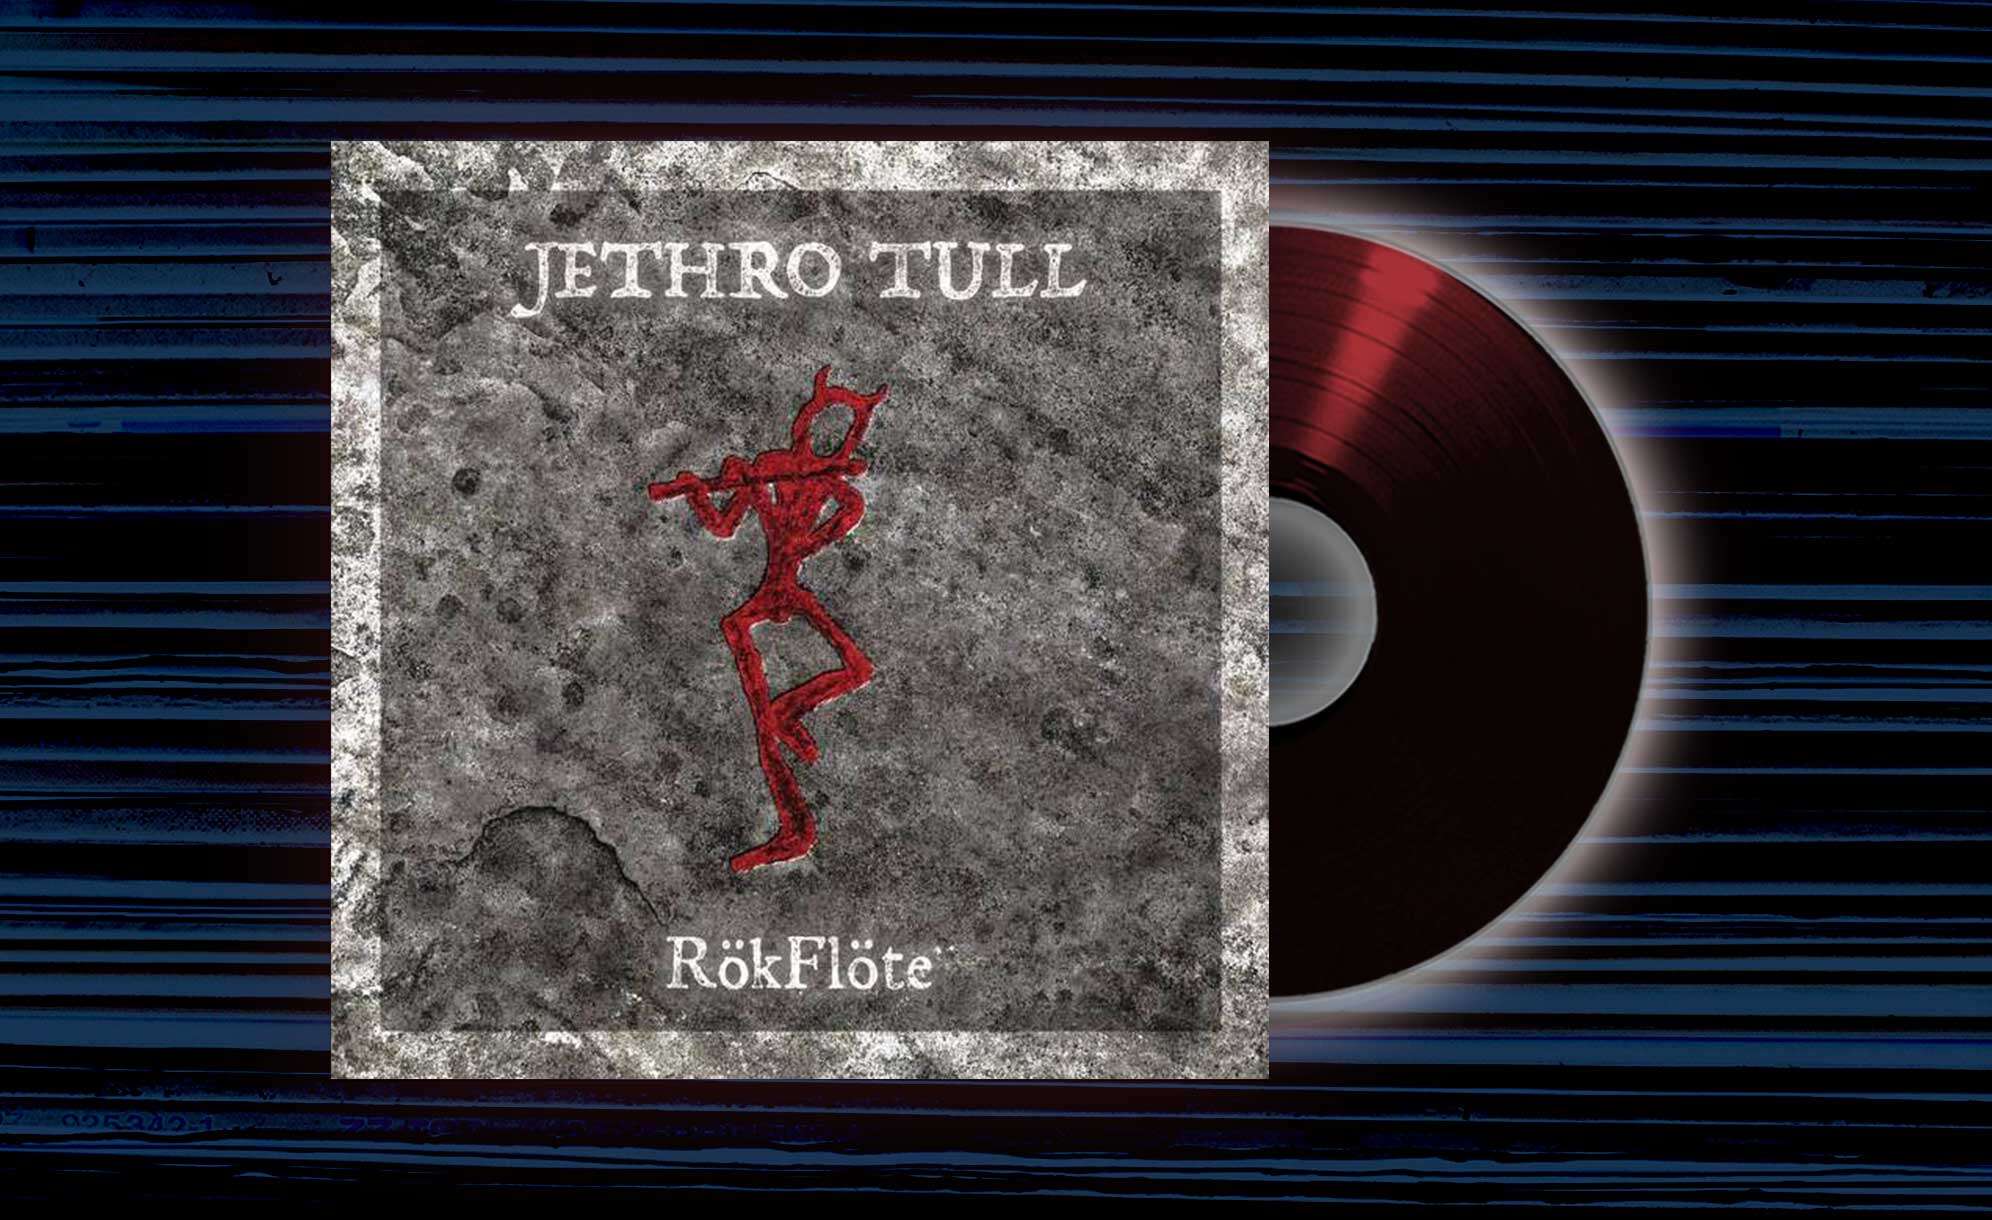 Albumcover von Jethro Tull's Album "Rökflöte"